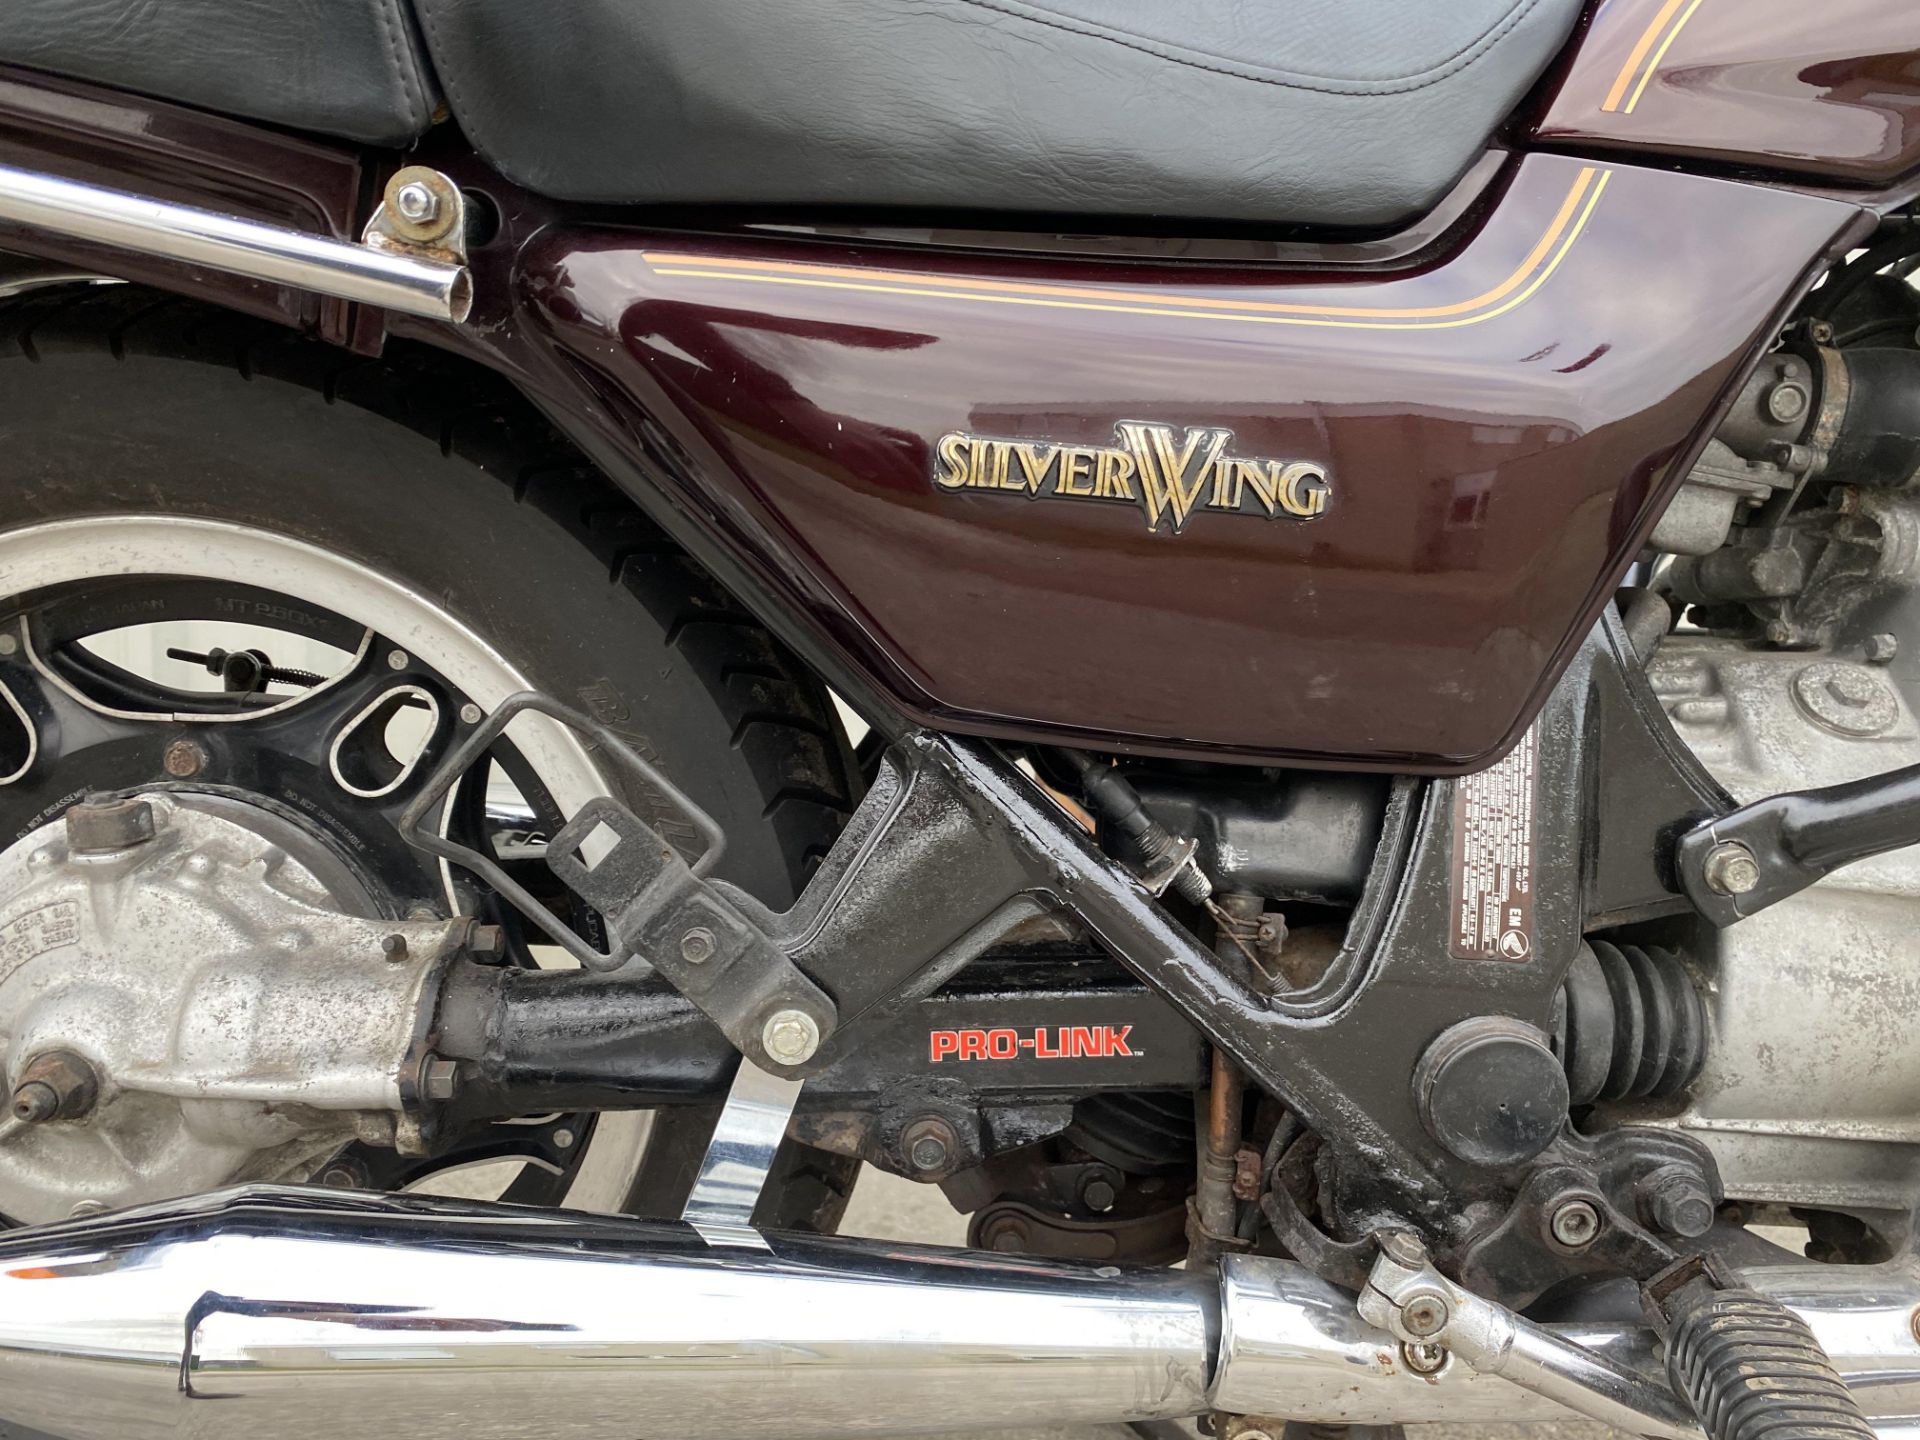 Honda Silverwing - Image 28 of 31